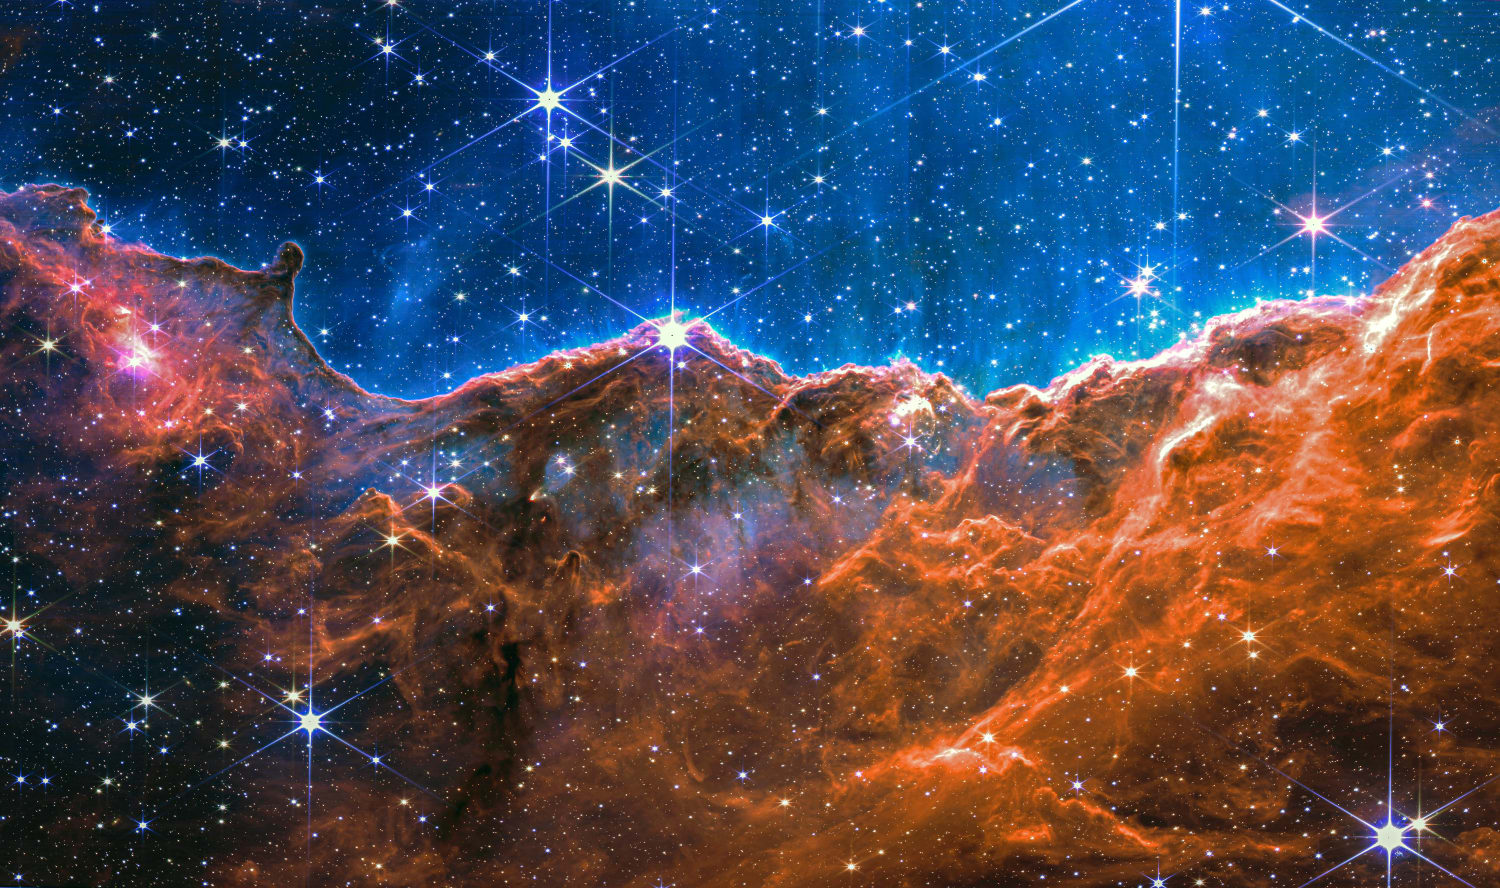 The Carina Nebula - my own take at processing James Webb Space Telescope raw data